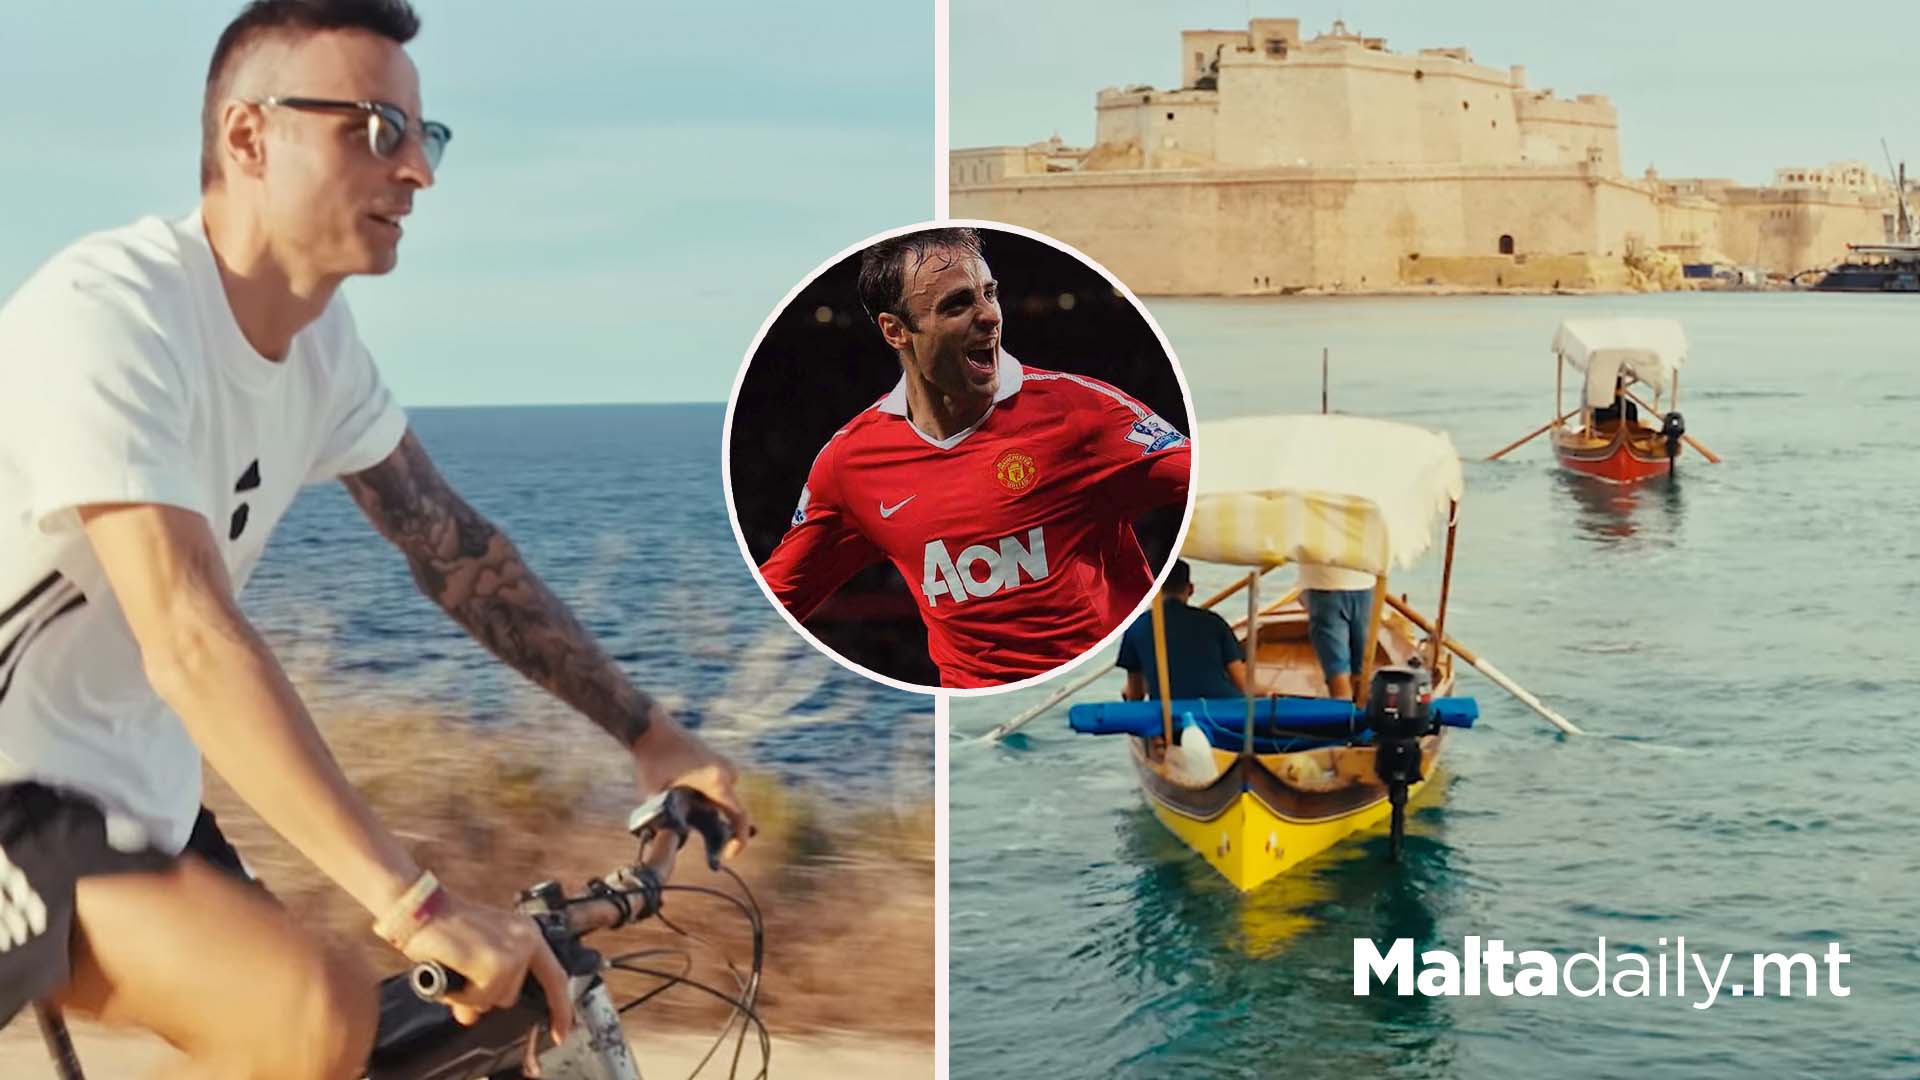 Manchester United’s Dimitar Berbatov Tours Around Malta